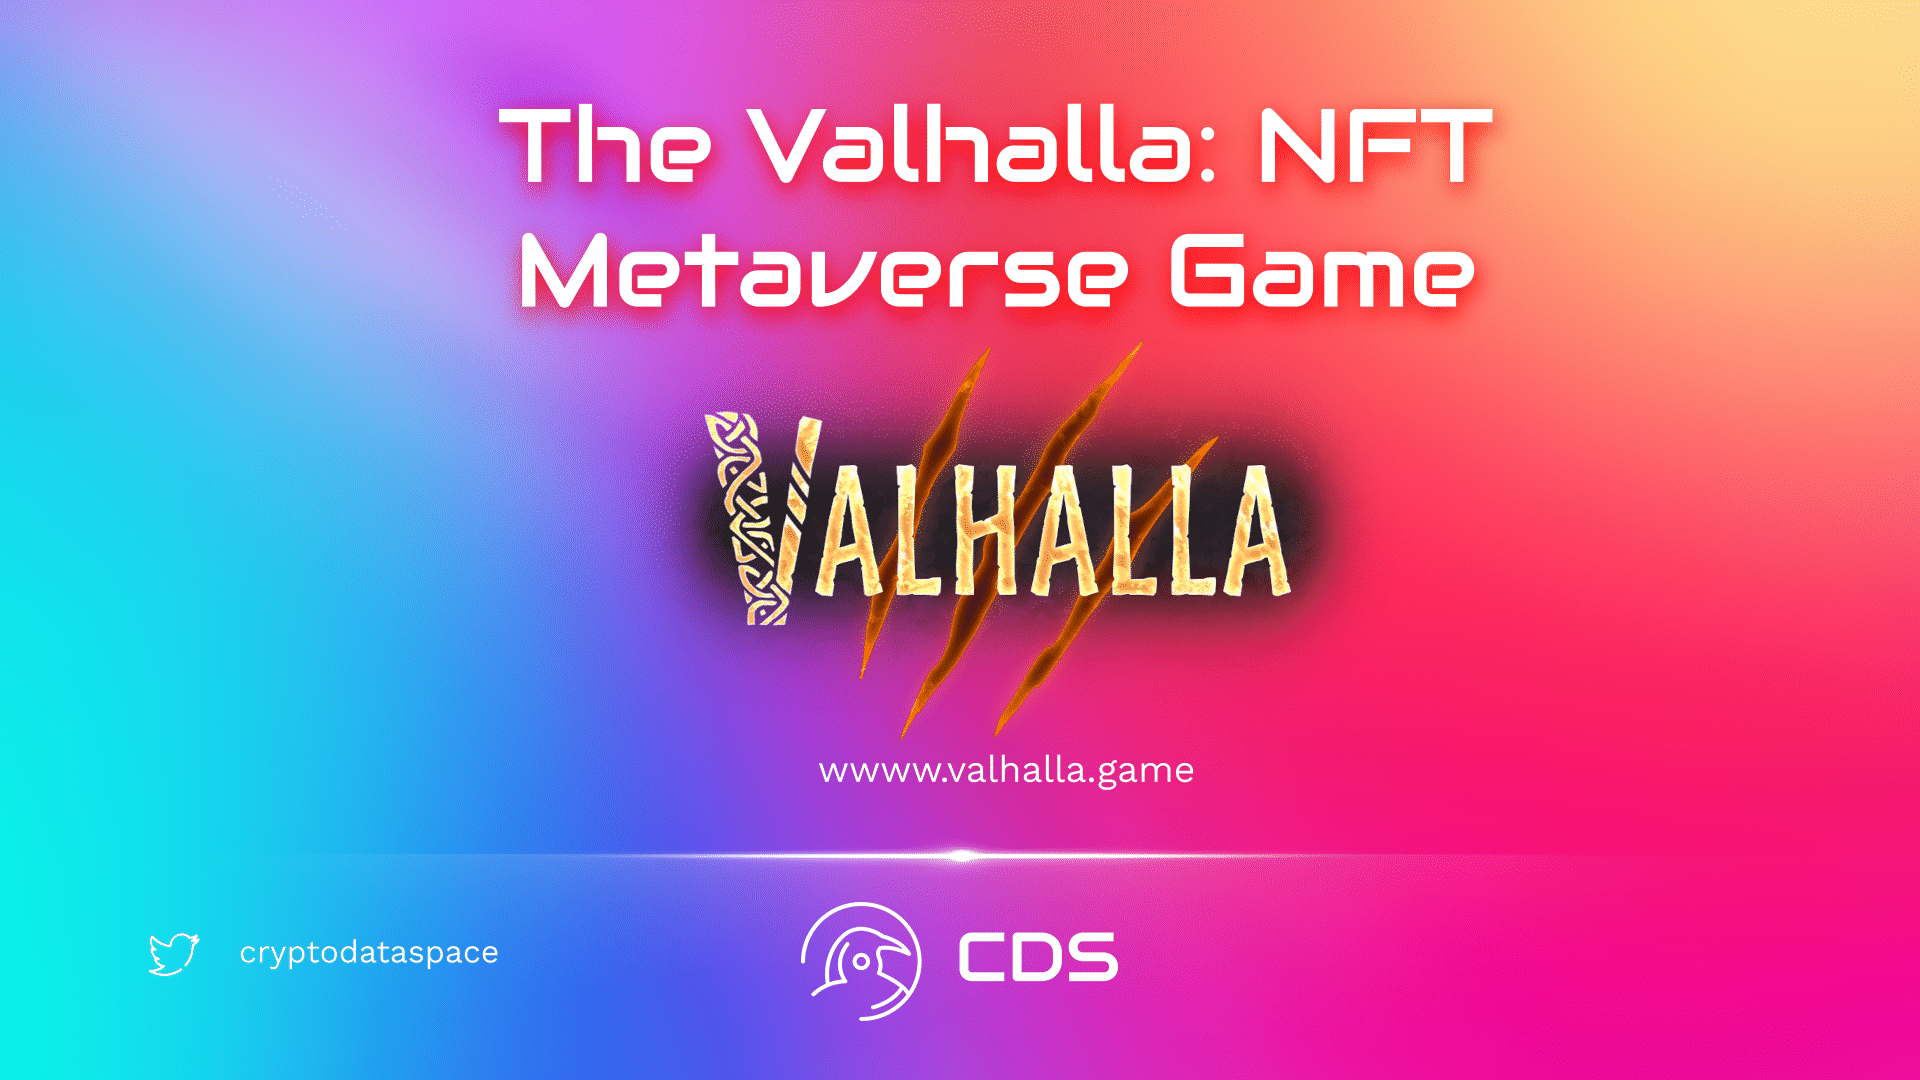 The Valhalla: NFT Metaverse Game